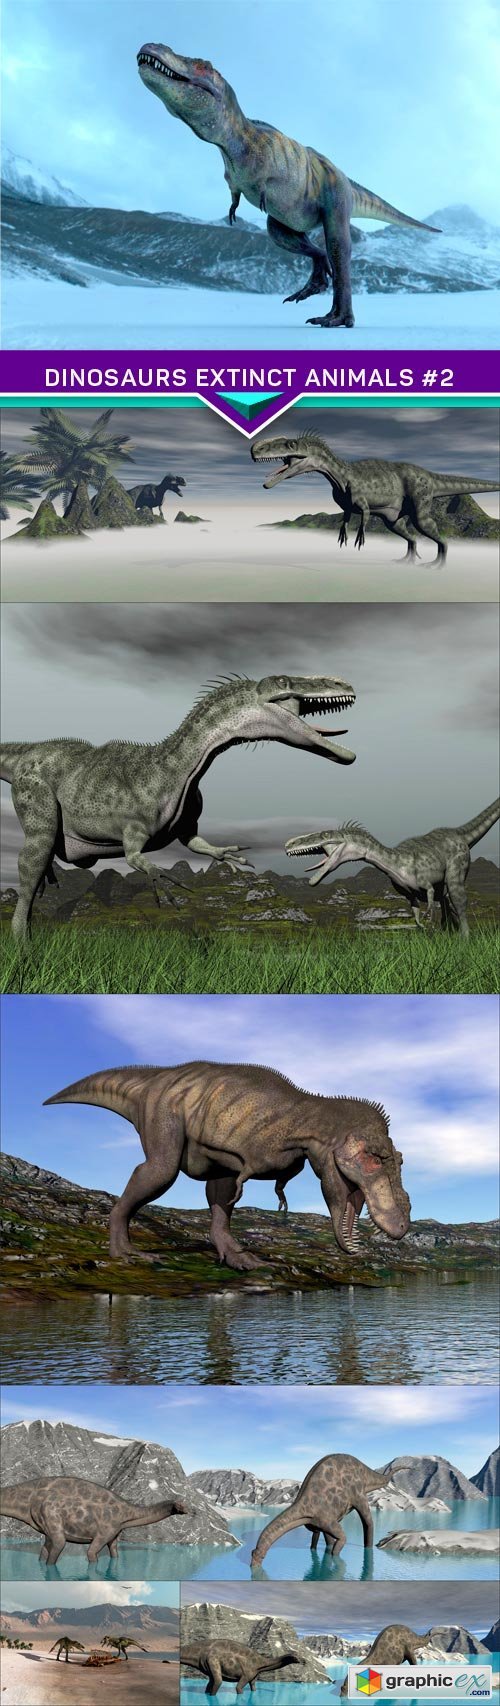 Dinosaurs extinct animals #2 7X JPEG